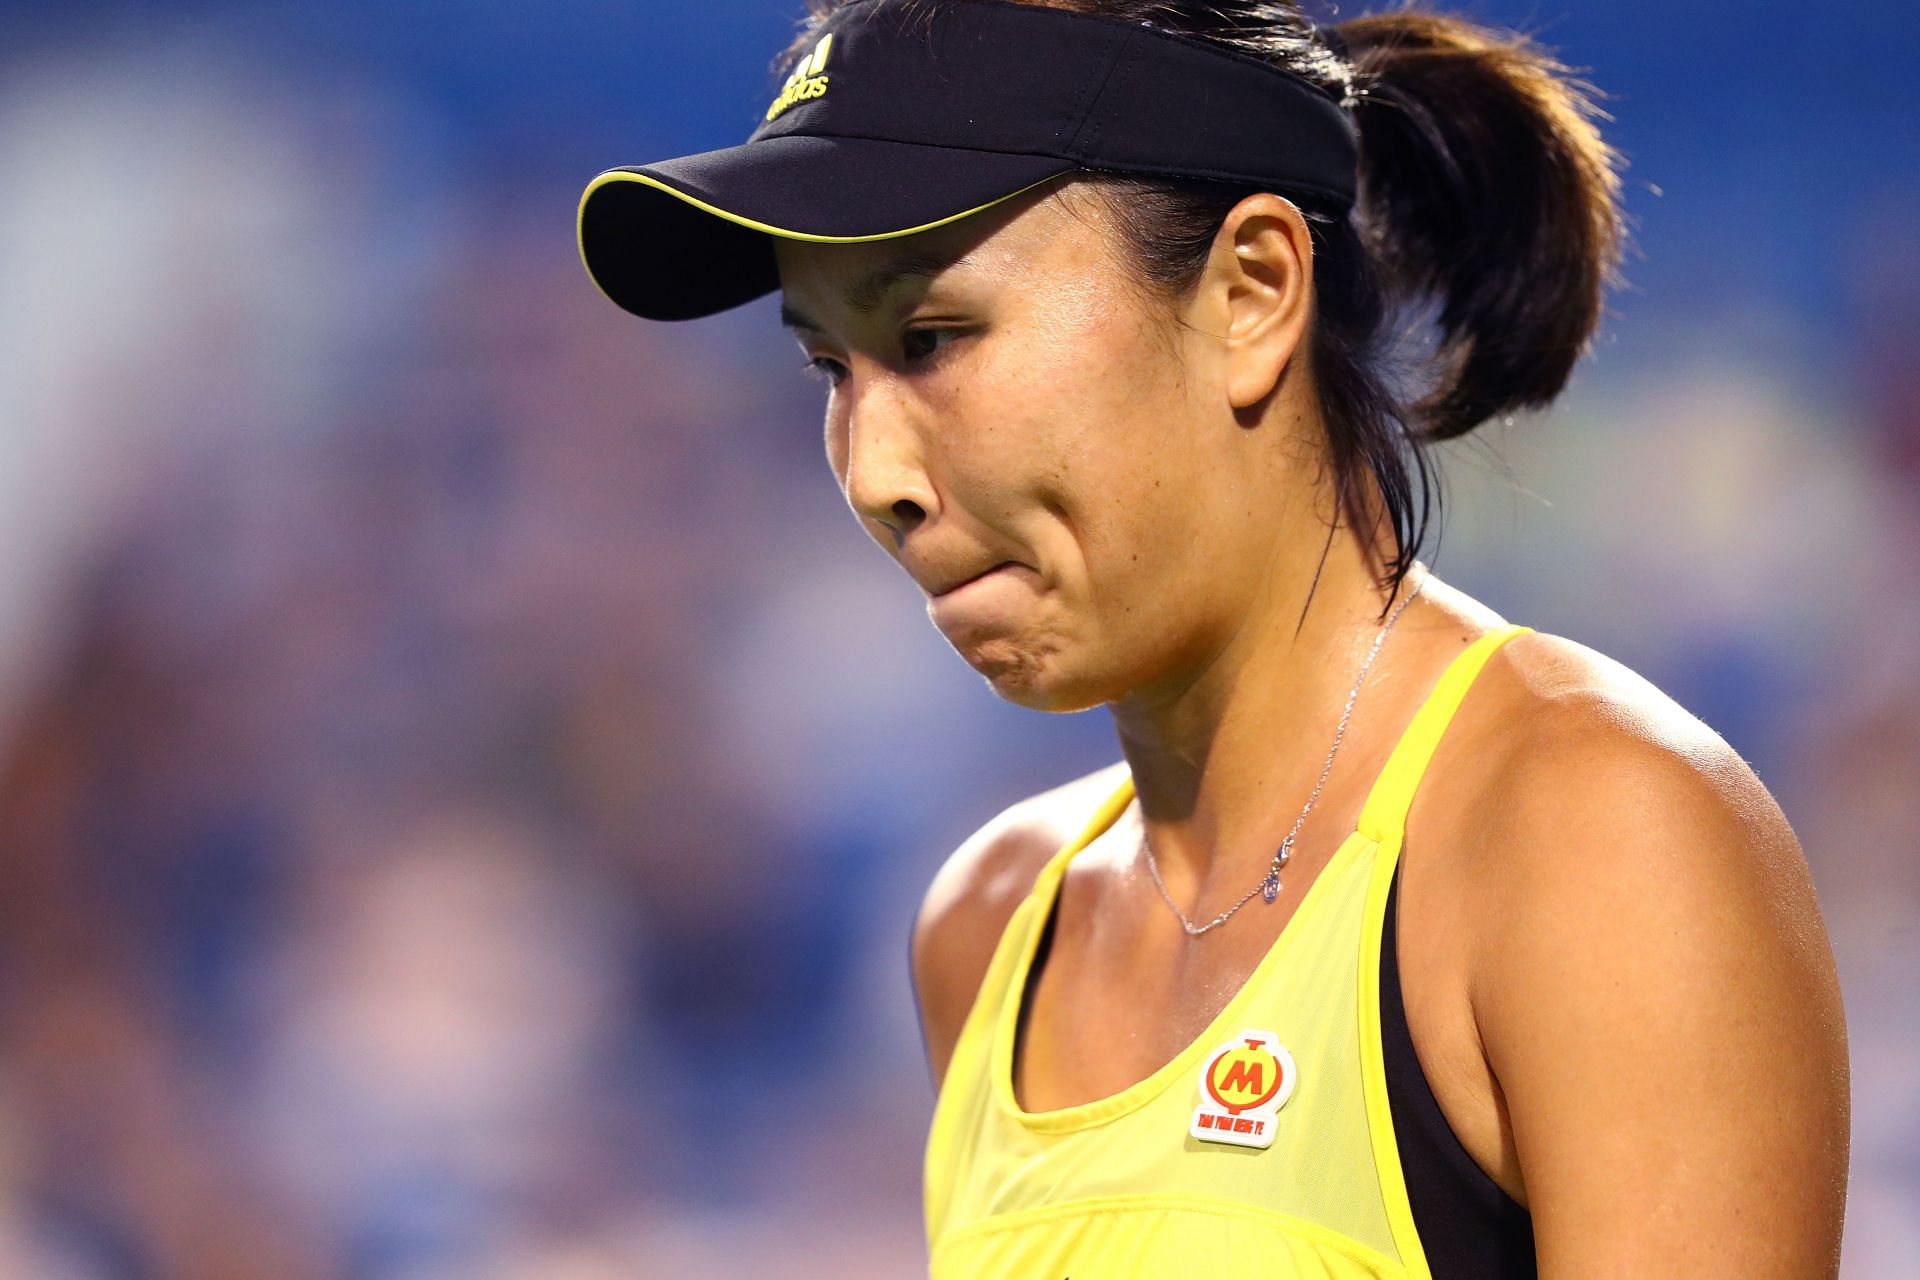 Peng Shuai at the Connecticut Open